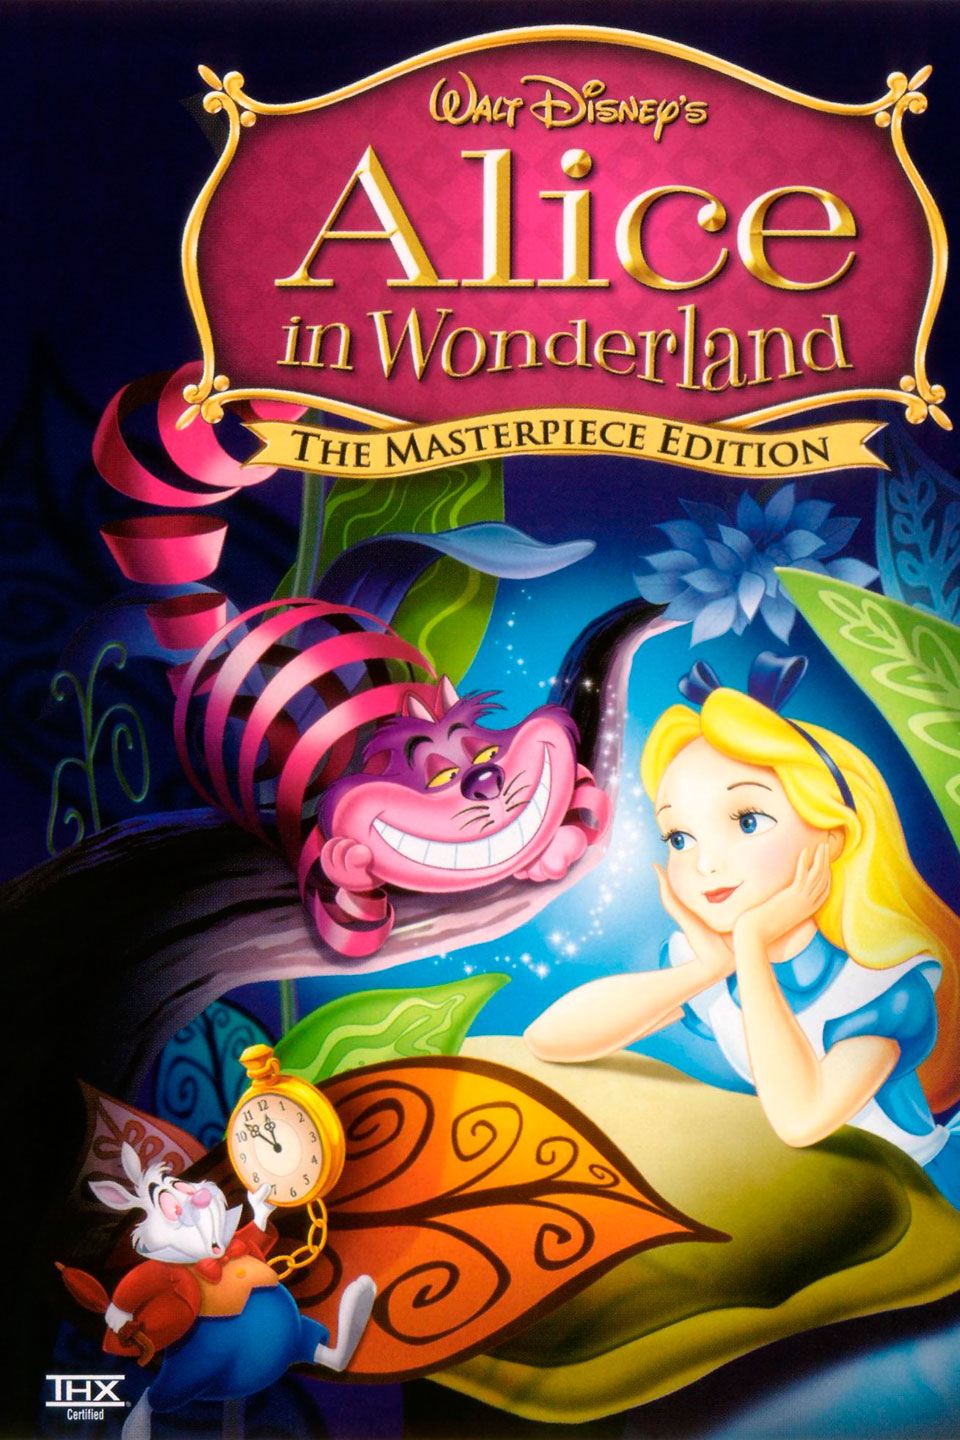 Alice in Wonderland (1951)